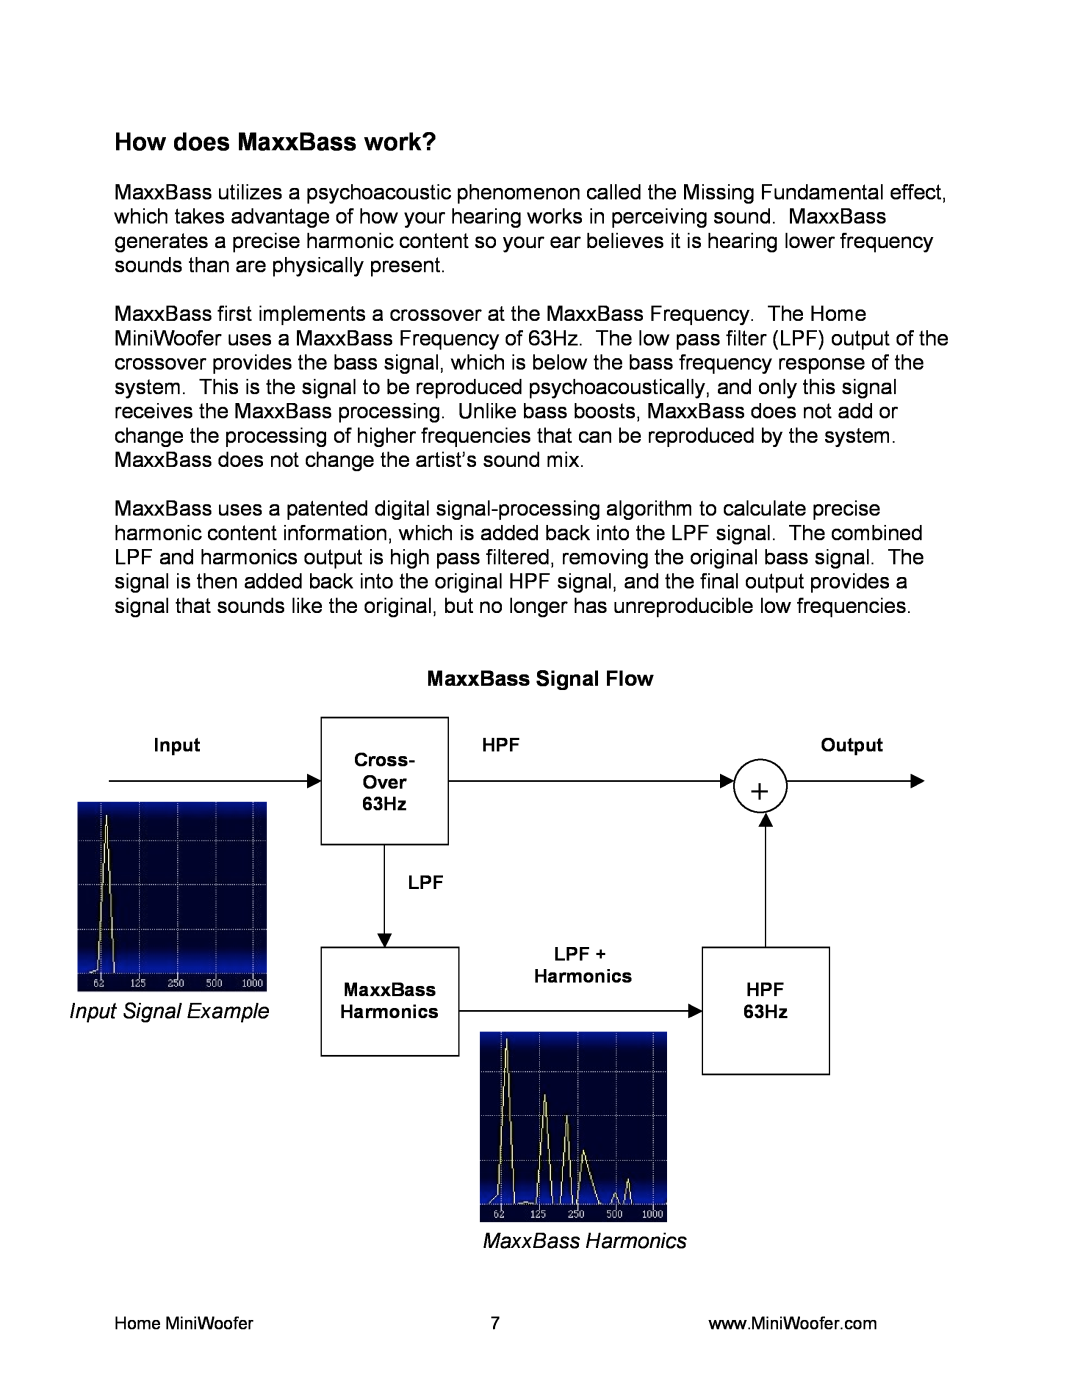 Waves MiniWoofer manual How does MaxxBass work?, MaxxBass Signal Flow, Input Signal Example, MaxxBass Harmonics 